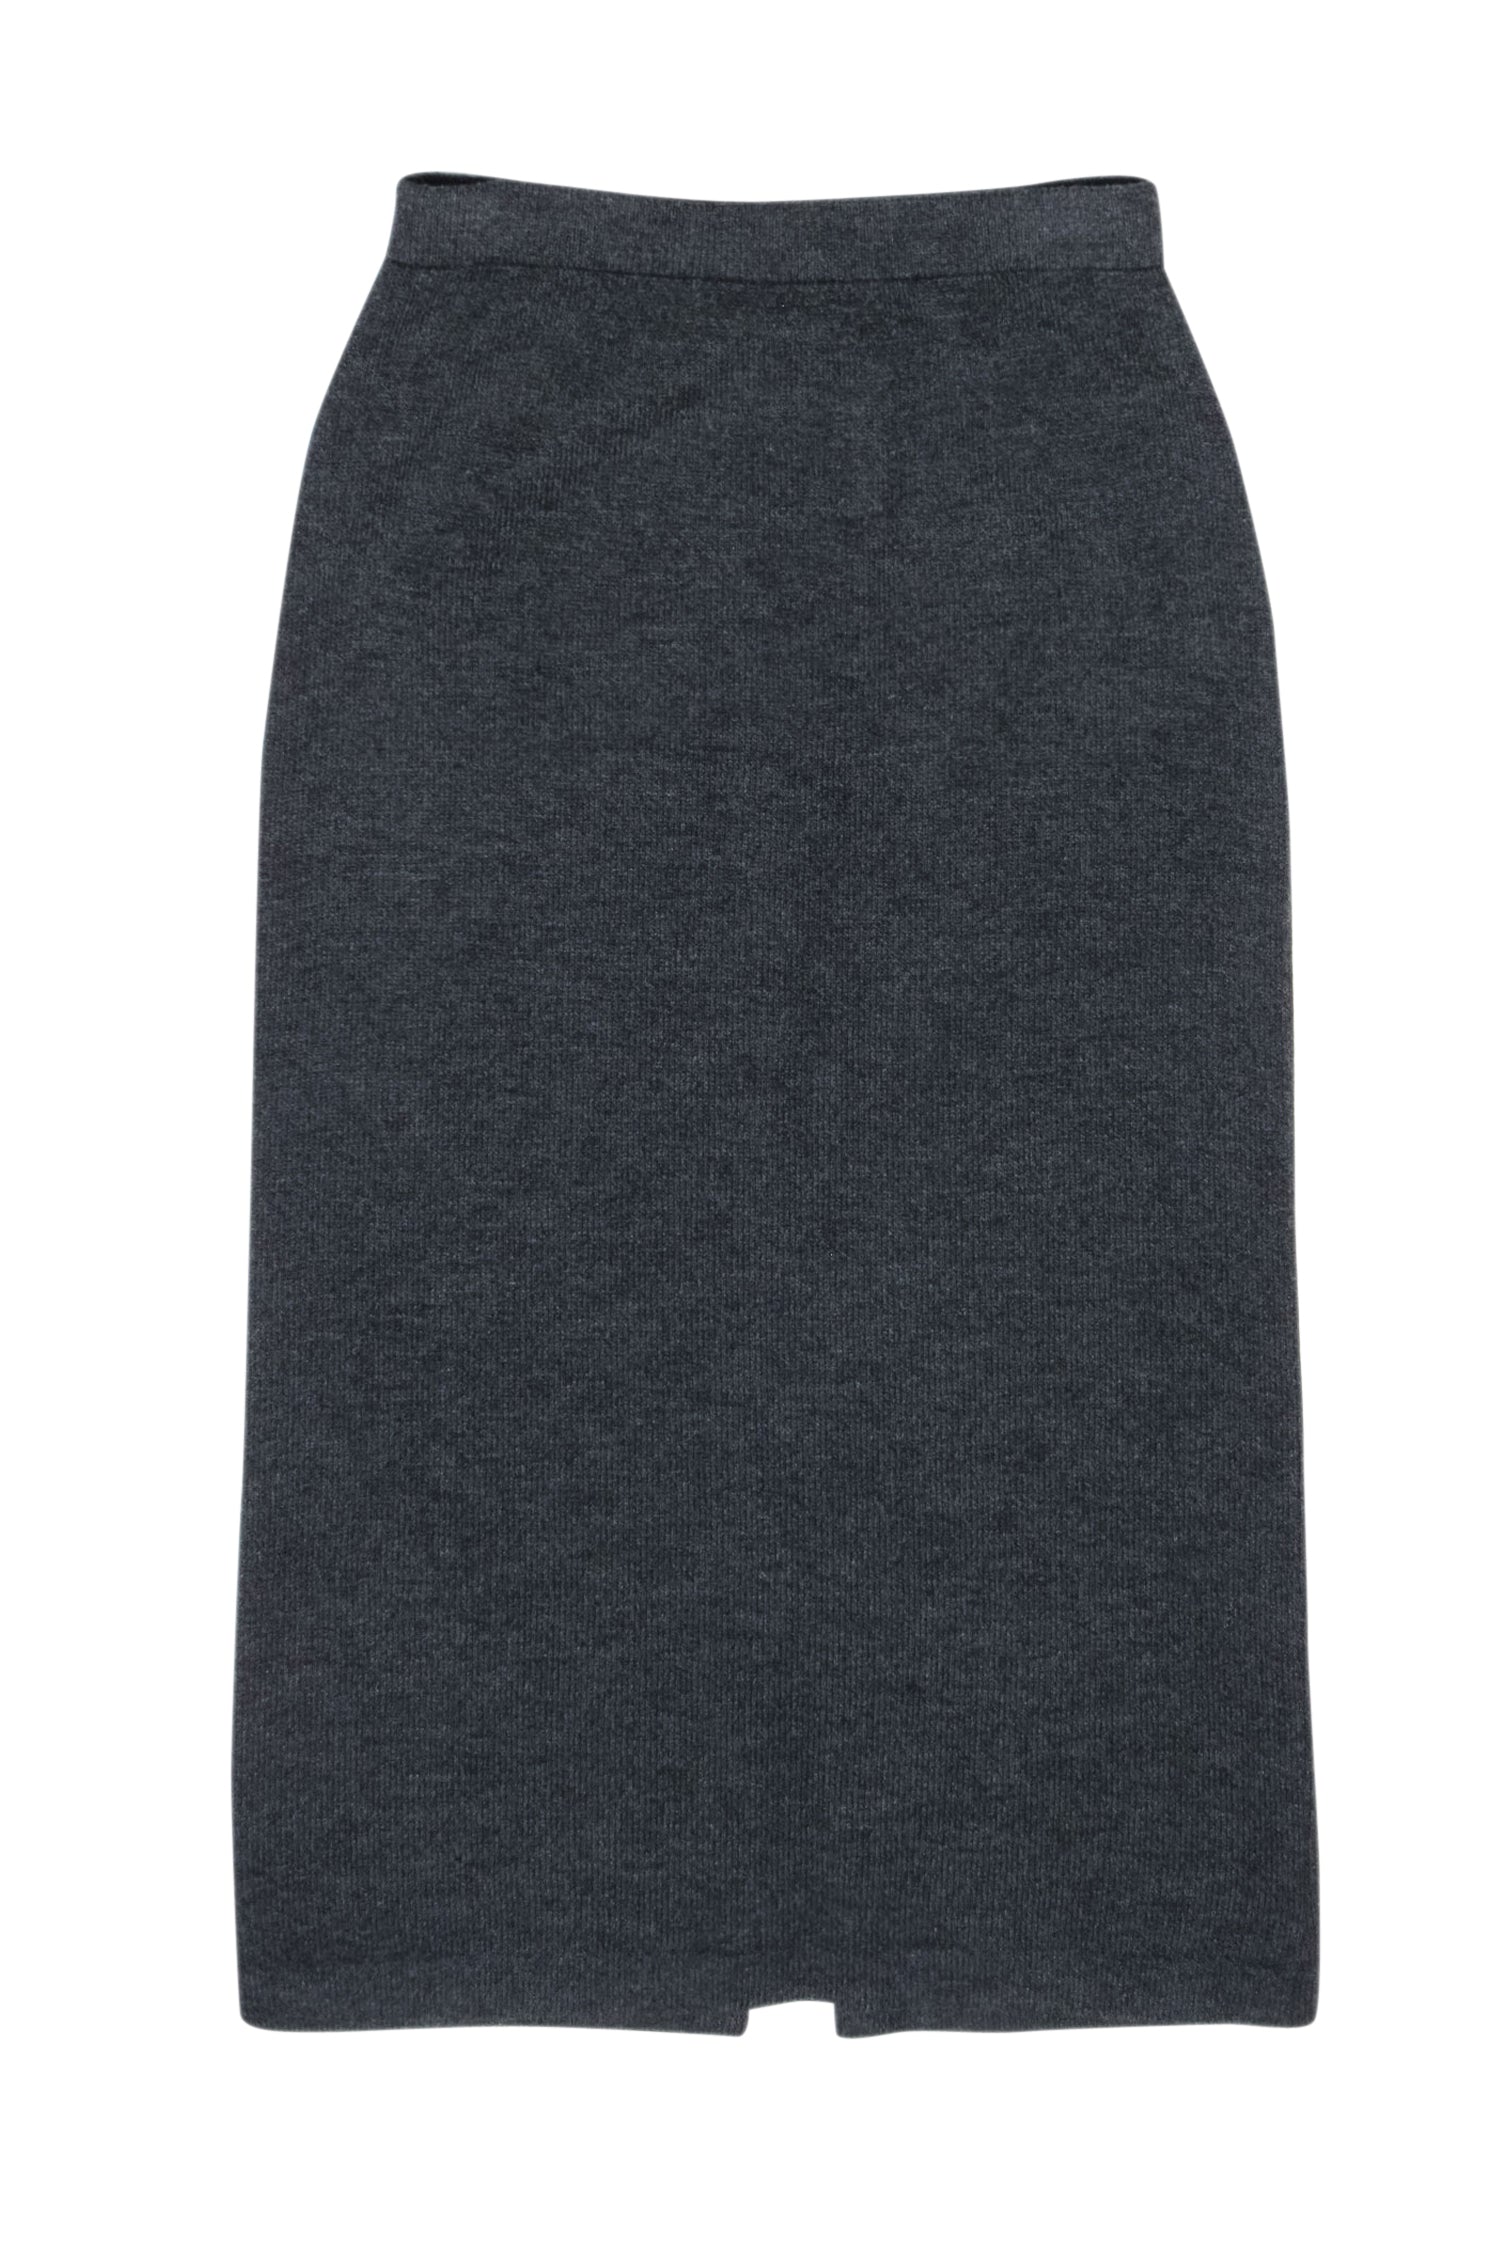 St. John - Charcoal Grey Knit Midi Pencil Skirt Sz 4